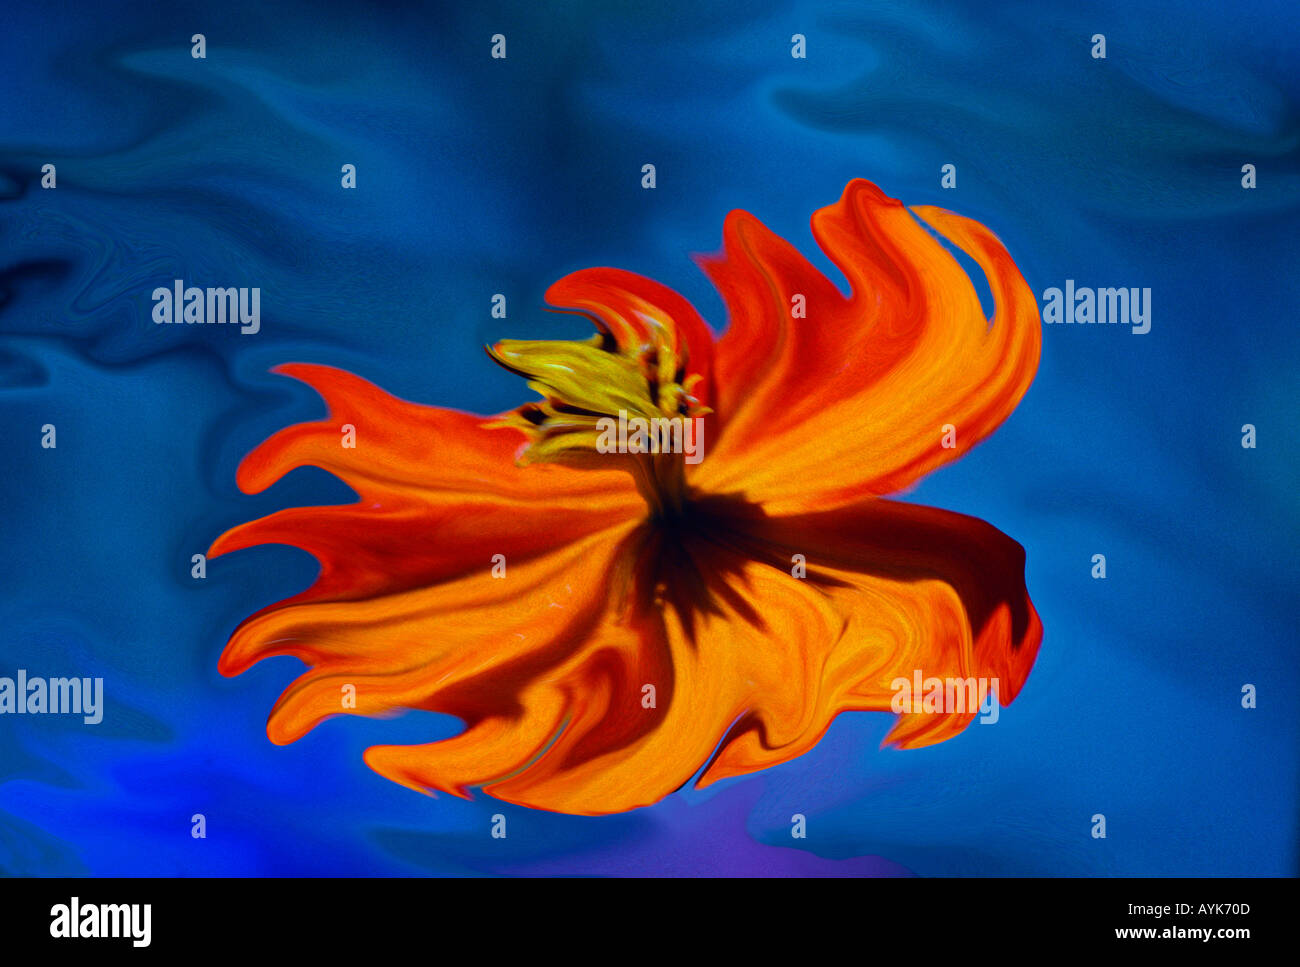 Abstract art orange flower blossom fluid blue background Stock Photo